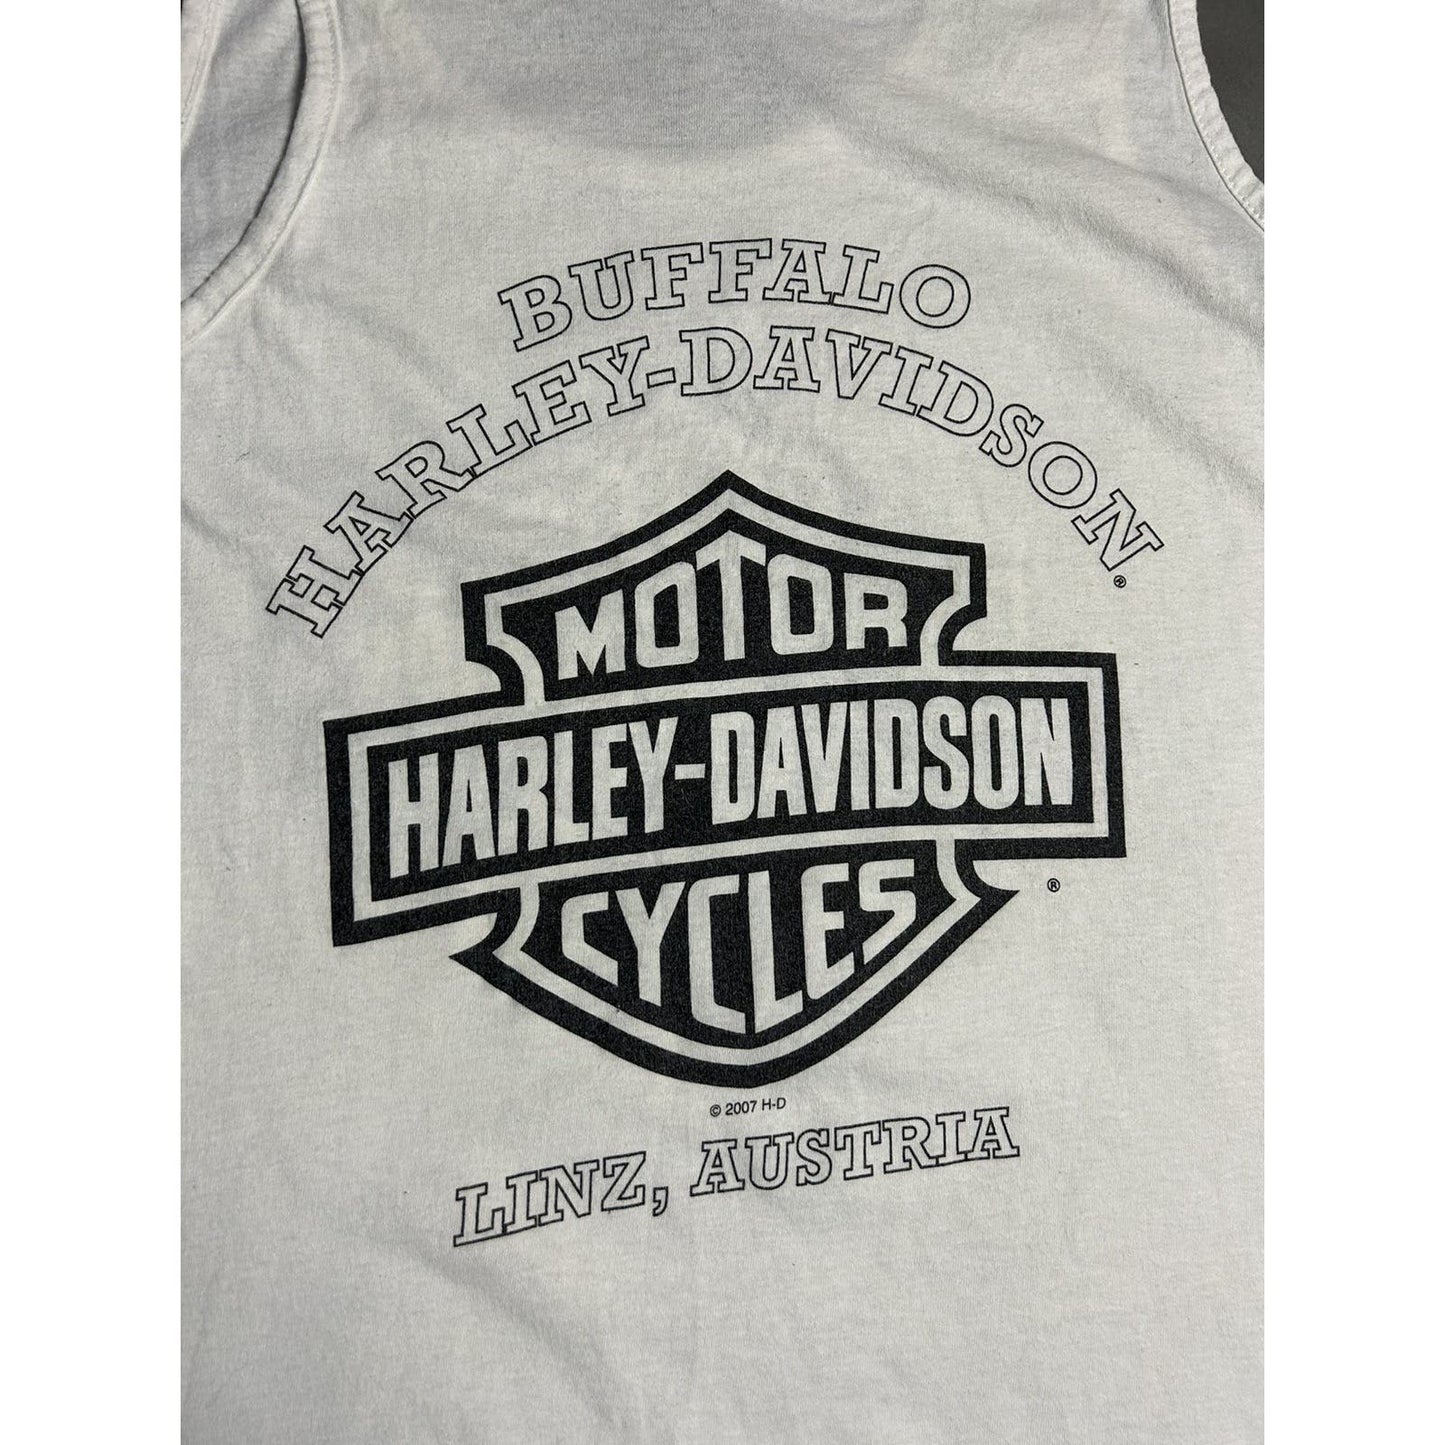 Harley Davidson vintage tank top big logo